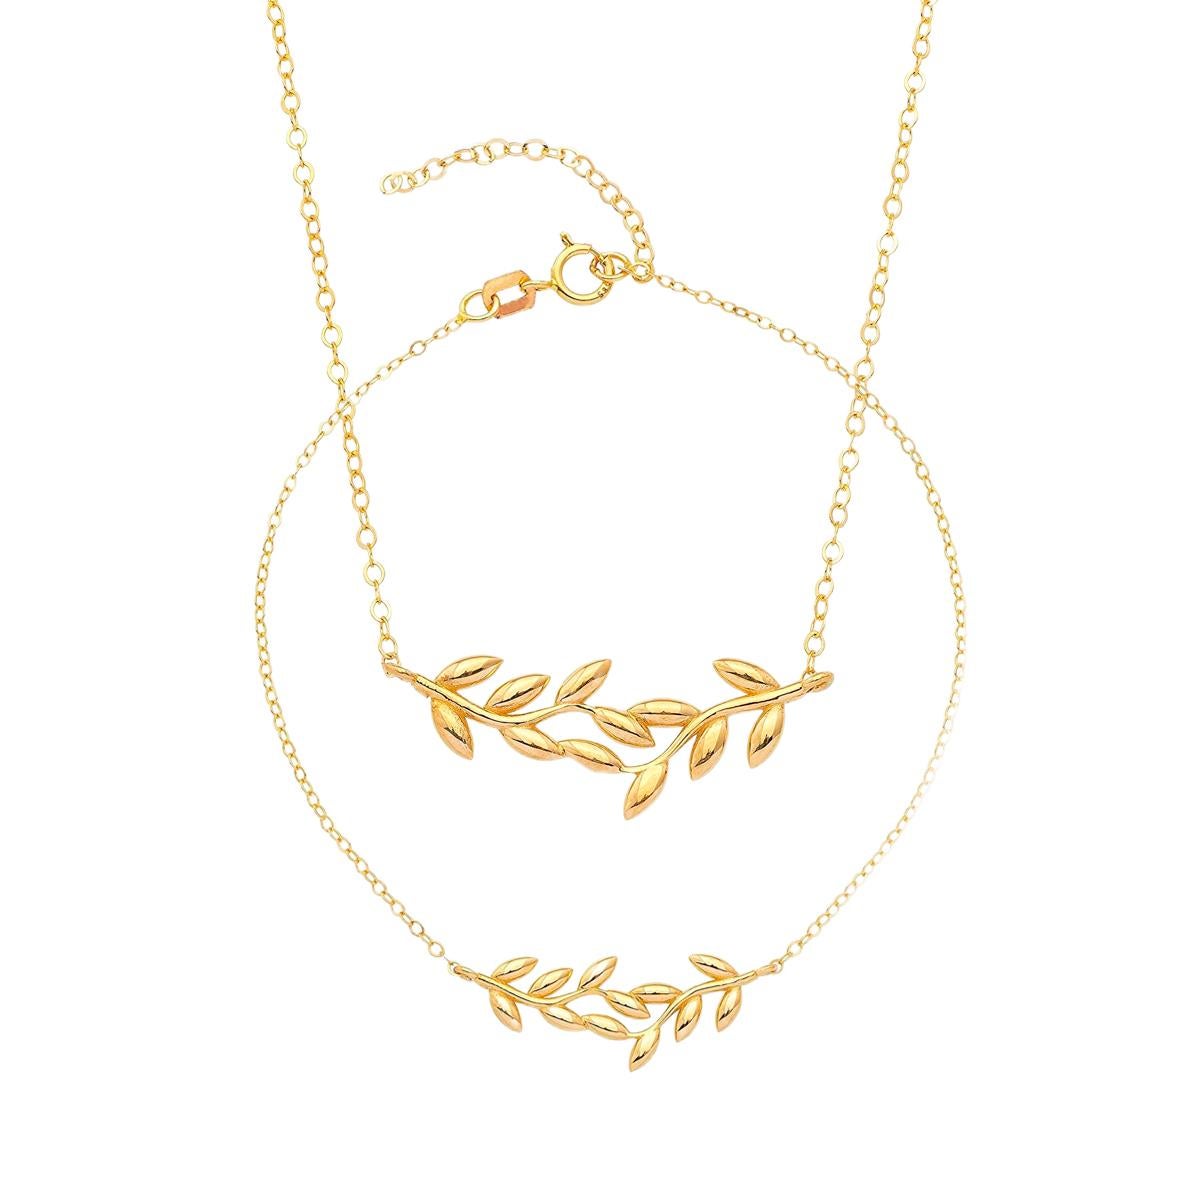  Set: Chain necklace and bracelet in 14 karat gold. Olive tree branch gold bracelet and necklace. Gold Leaf bracelet and necklace. Wedding necklace and bracelet. 

Total weight:  2.55 gr 
Necklace weight: 1.45 gr
Bracelet weight: 1.10 gr
Necklace